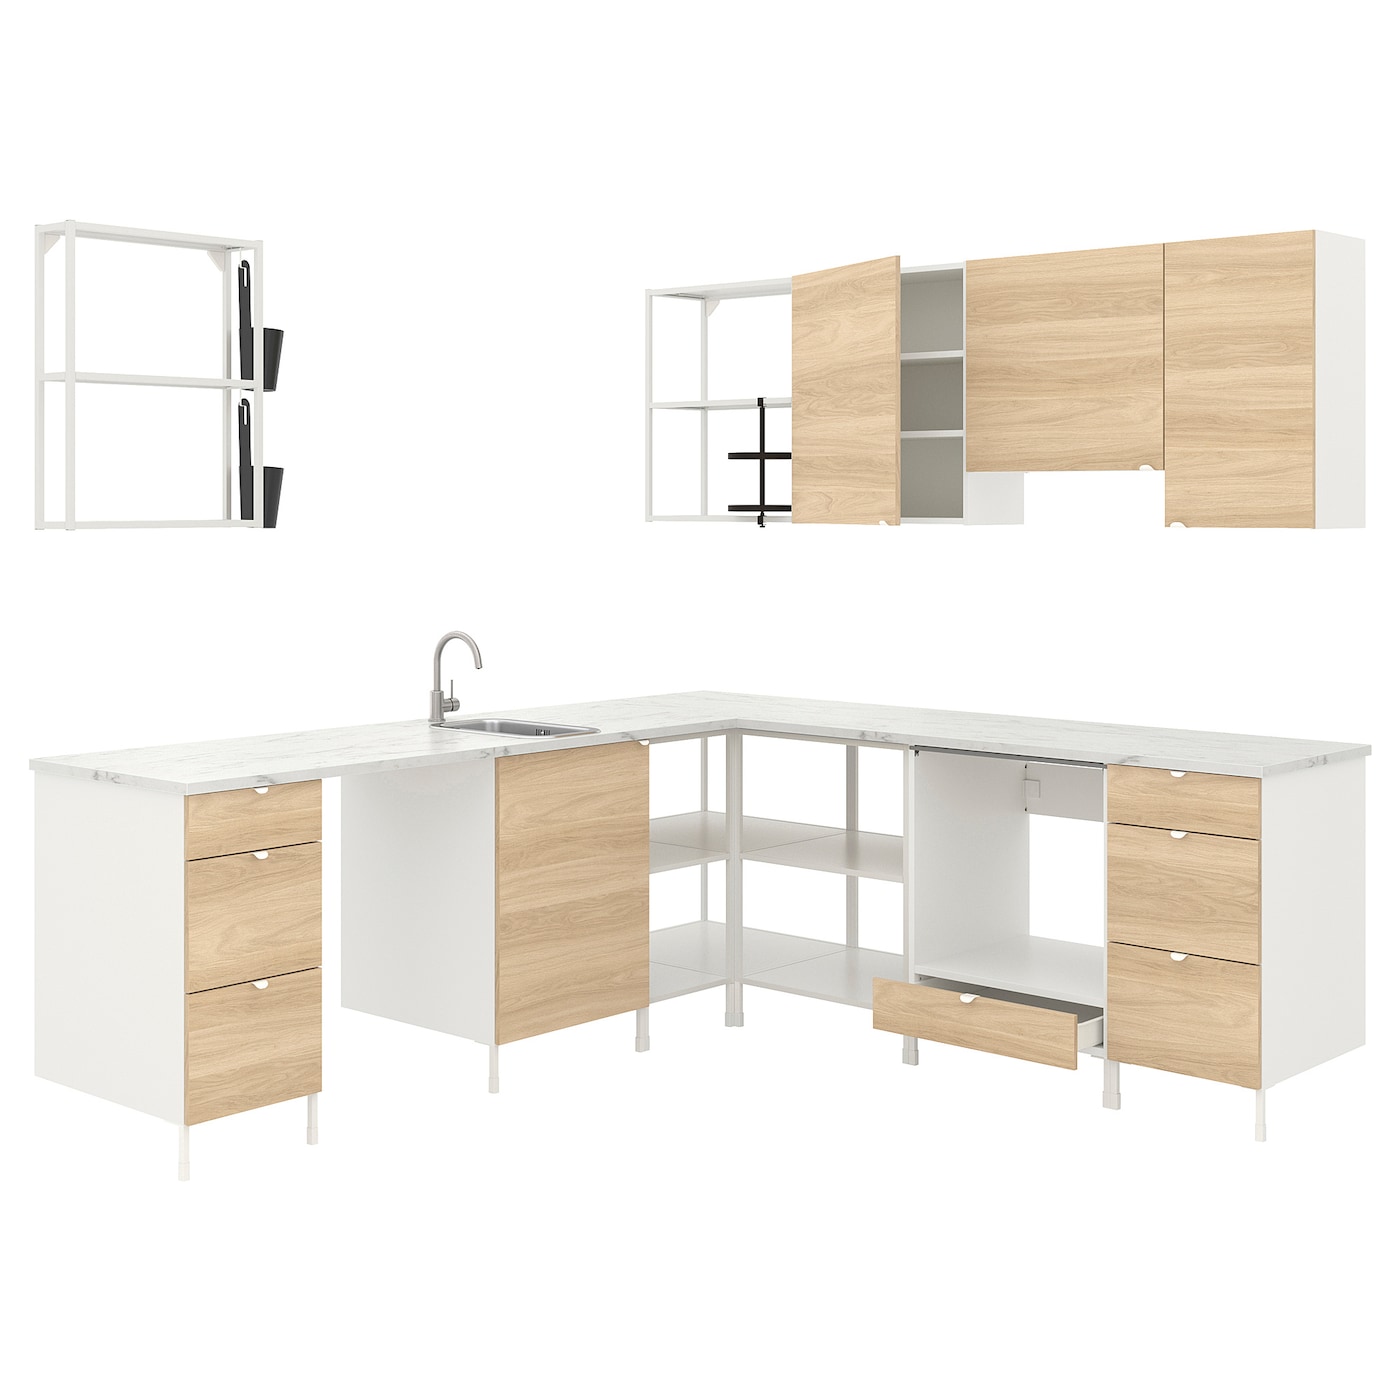 Угловая кухонная комбинация для хранения - ENHET  IKEA/ ЭНХЕТ ИКЕА, 261.5х221,5х75 см, белый/бежевый